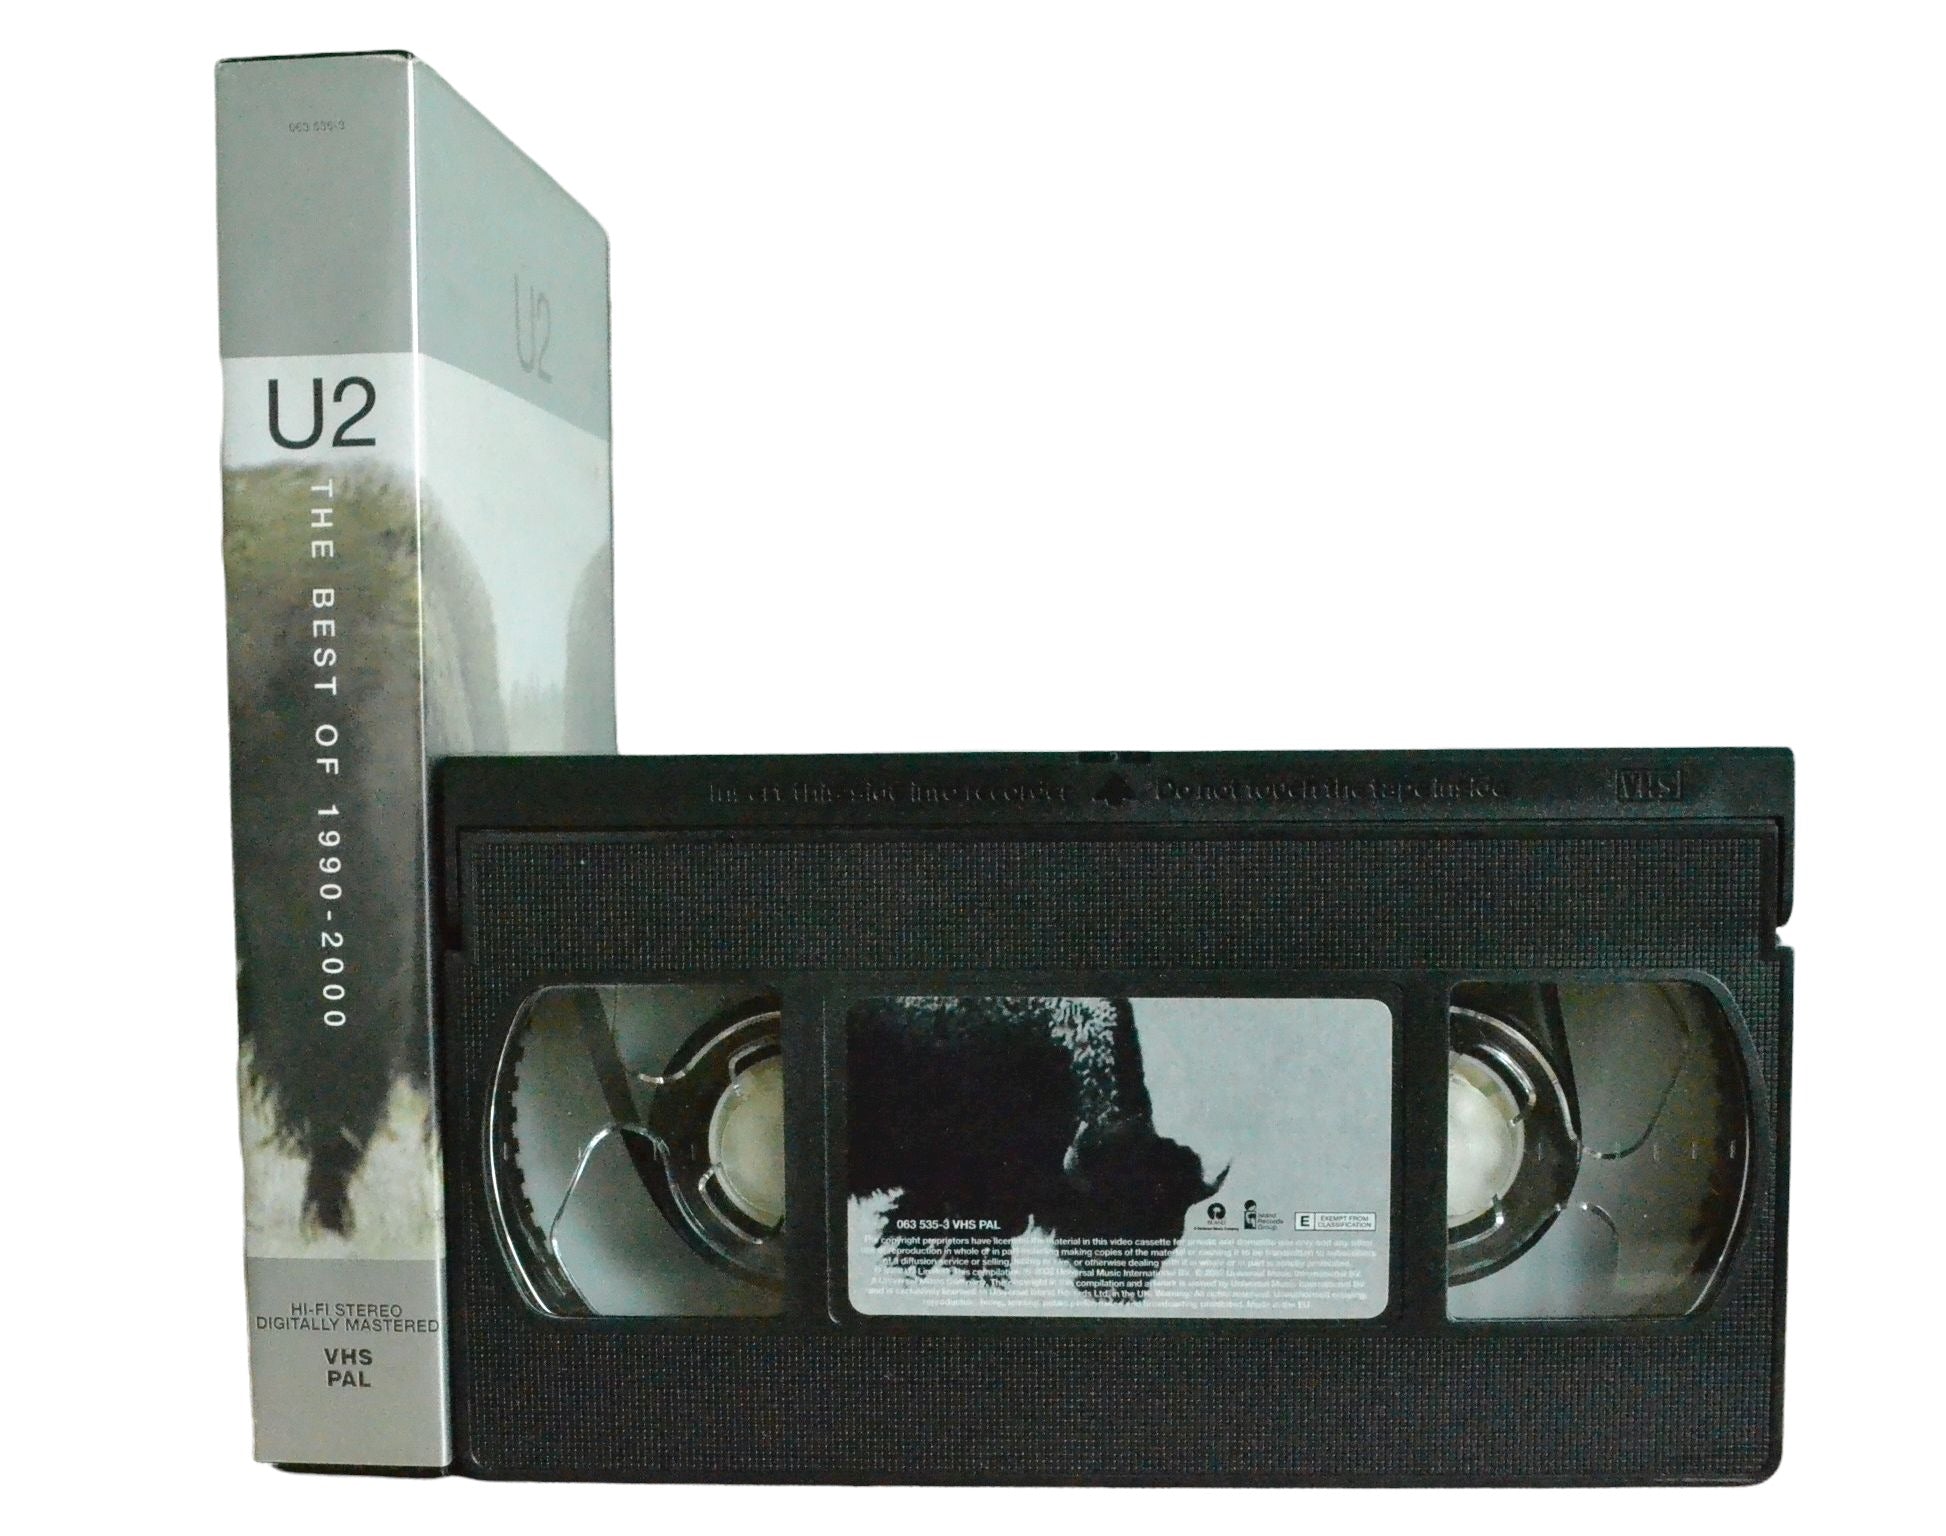 U2 - The Best of 1990 - 2000 - Bono - Digitally Mastered - Music - Pal VHS-